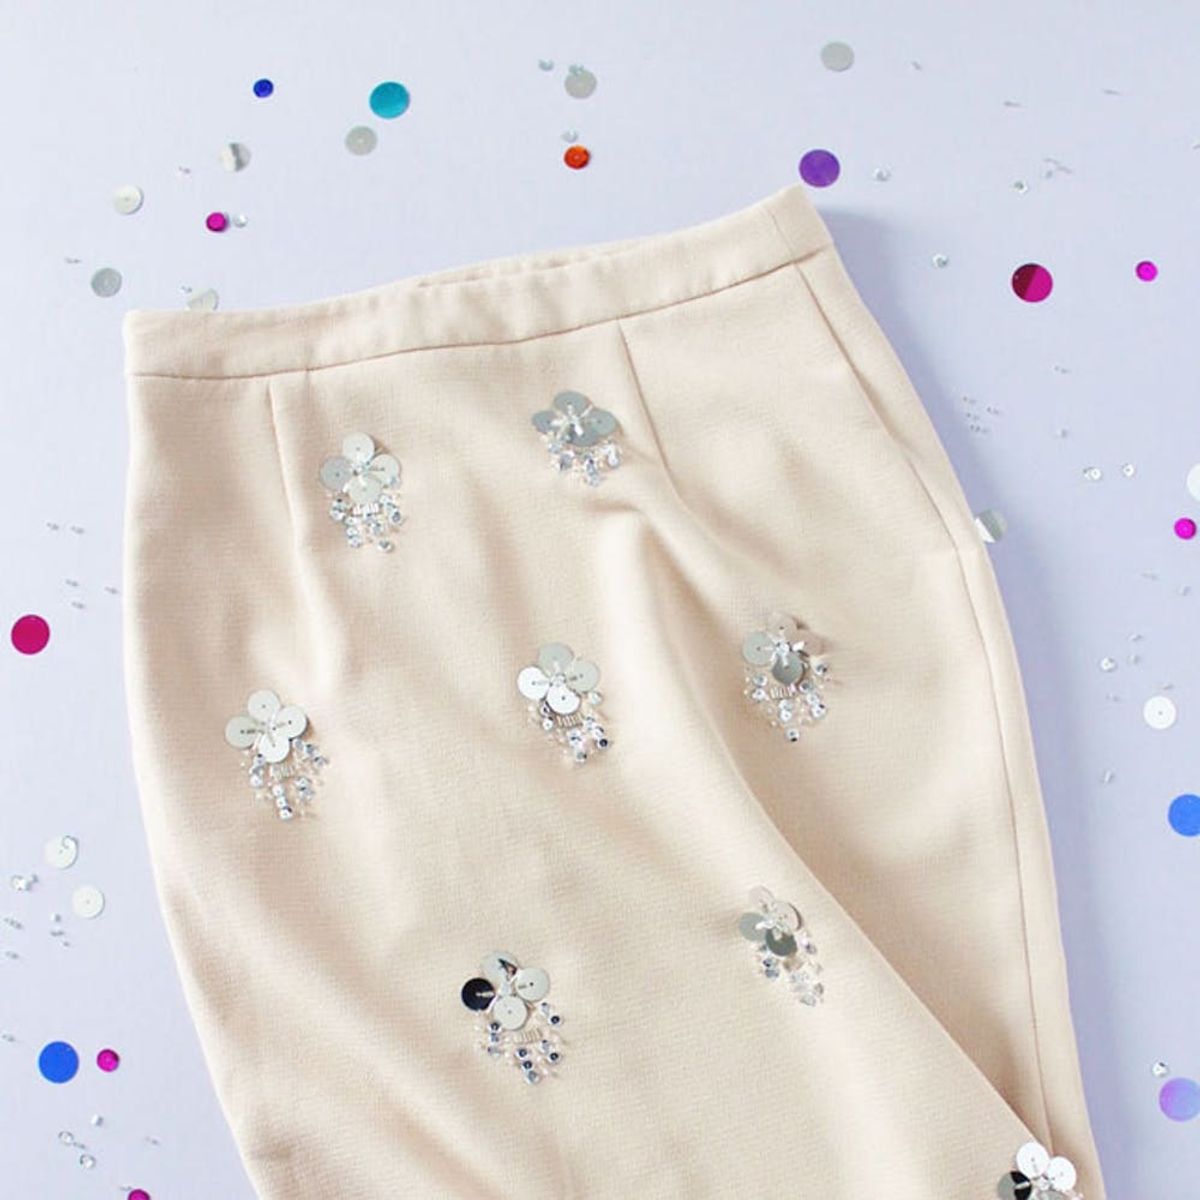 Make This $45 Embellished Sequin Skirt for $10